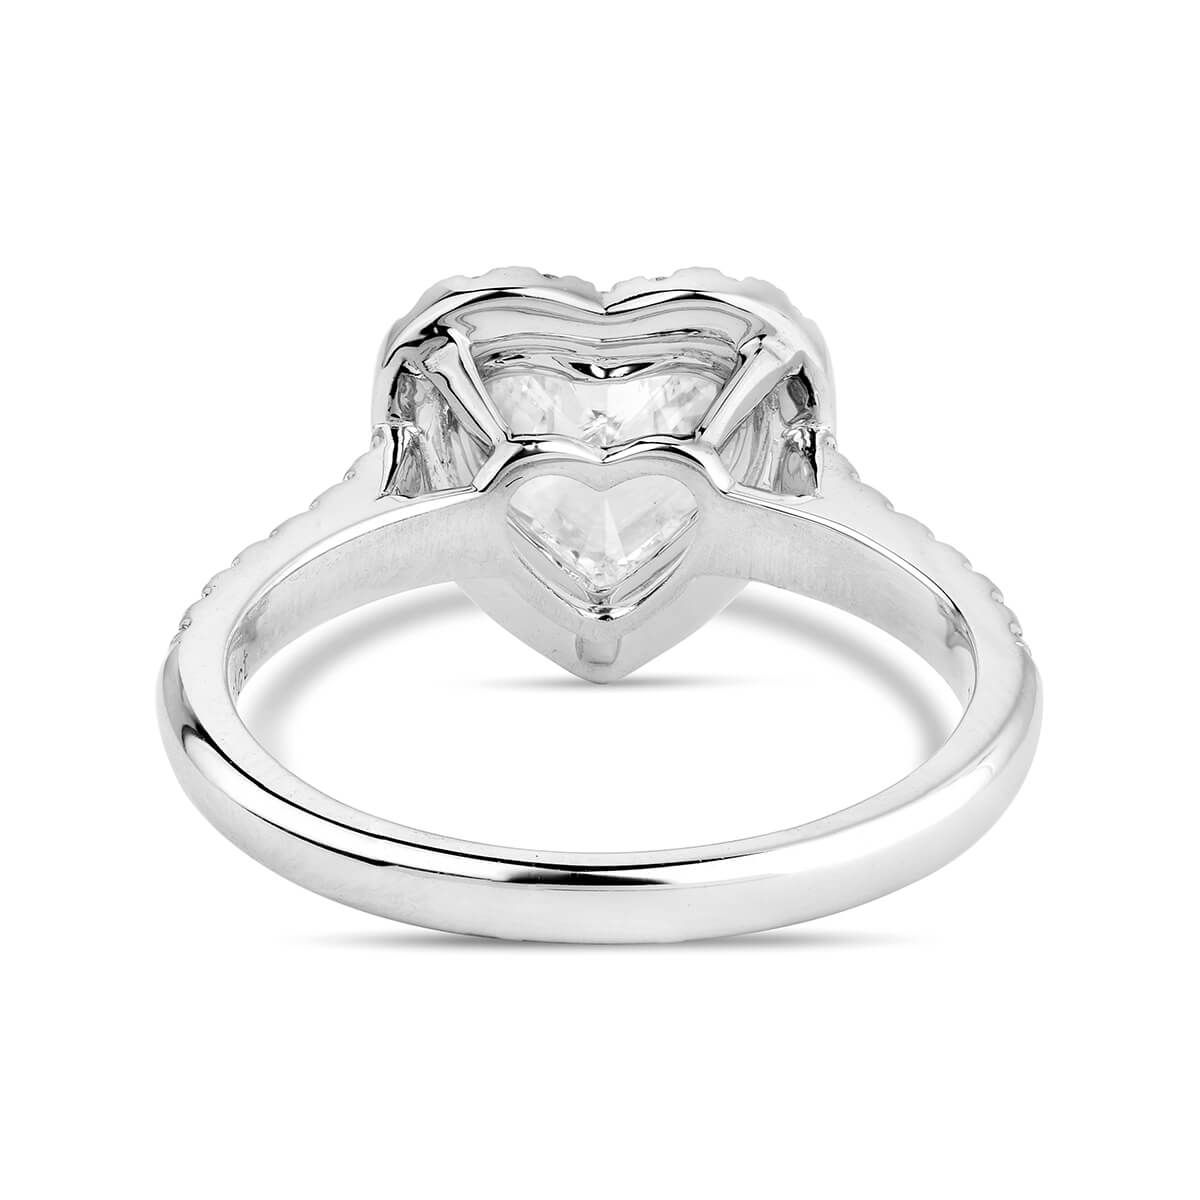  White Diamond Ring, 1.02 Ct. (1.33 Ct. TW), Heart shape, GIA Certified, 7271864621